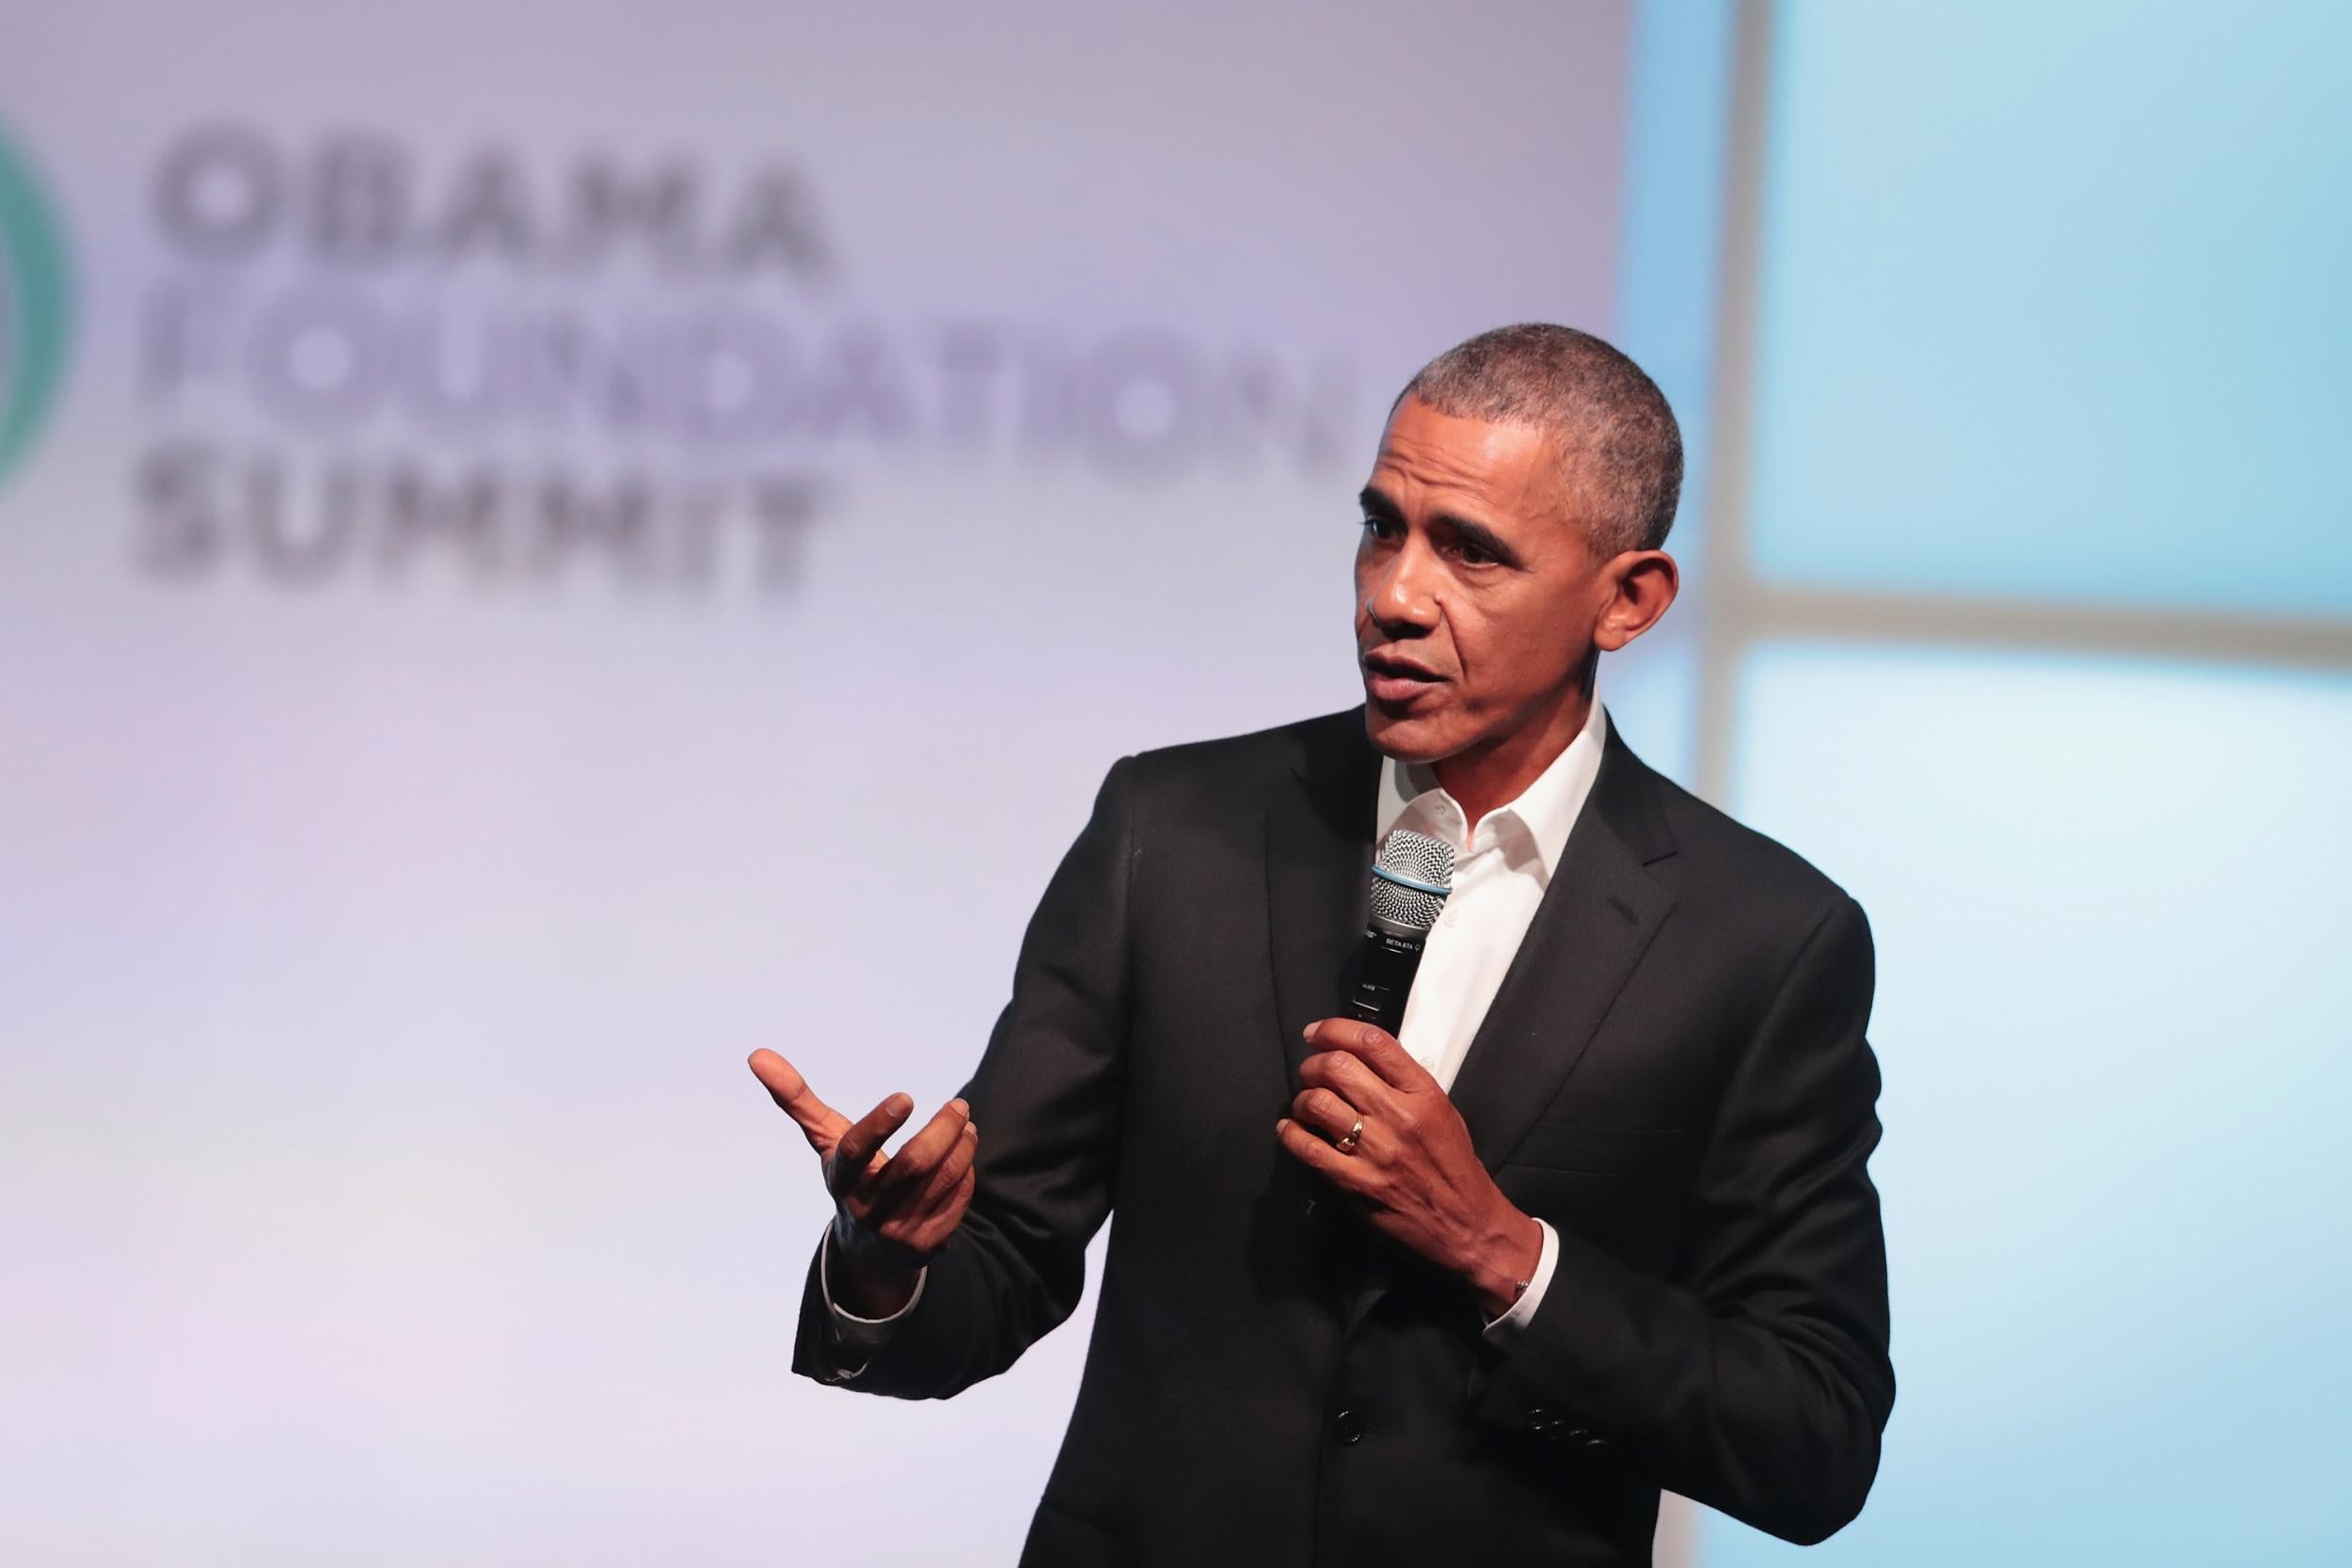 Former president Barack Obama speaks at the inaugural Obama Foundation Summit